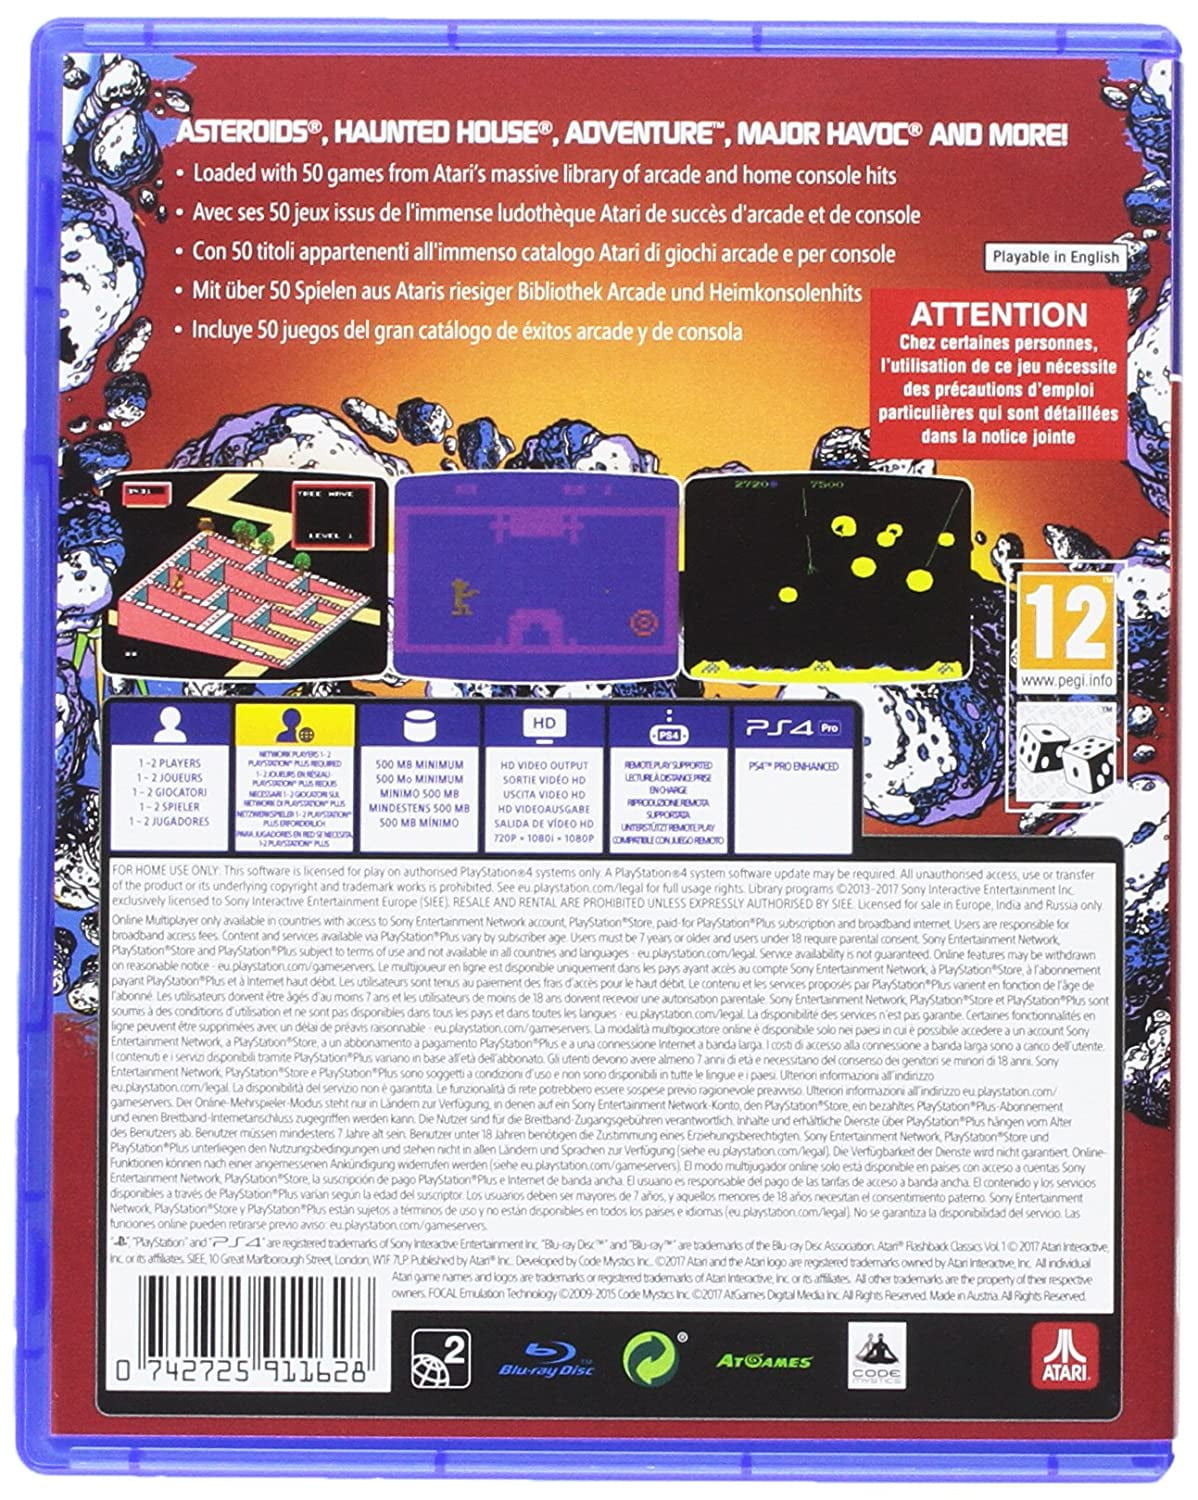 kedel mest Kontoret Atari Flashback Classics v.2 (Playstation 4 / PS4) 50 Games includes  Asteroids - Haunted House - Major Havoc and much more - Walmart.com